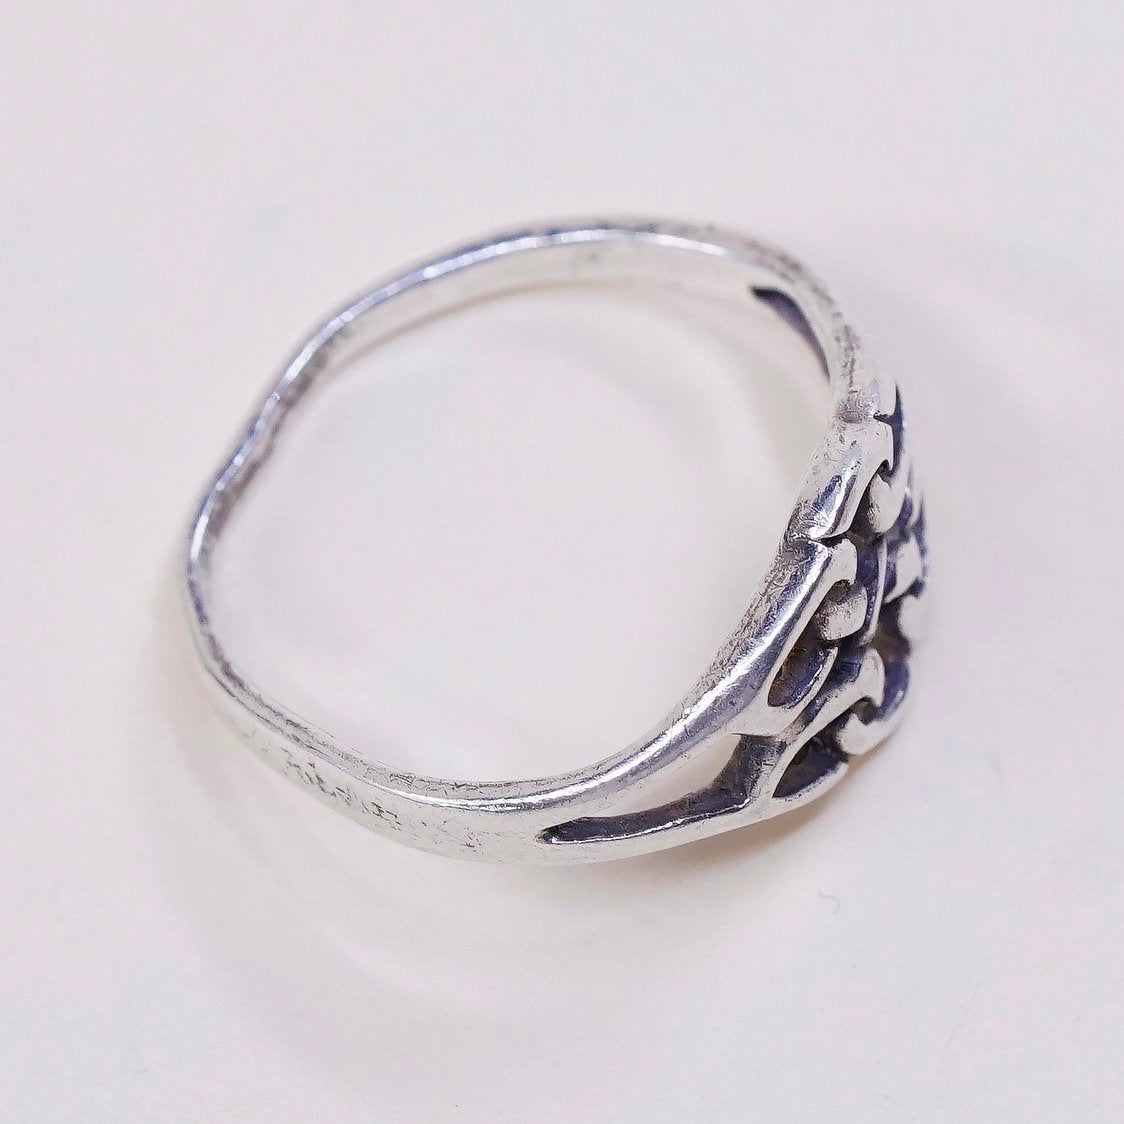 sz 5.25, vtg sterling silver handmade wired ring, 925 irish knot band